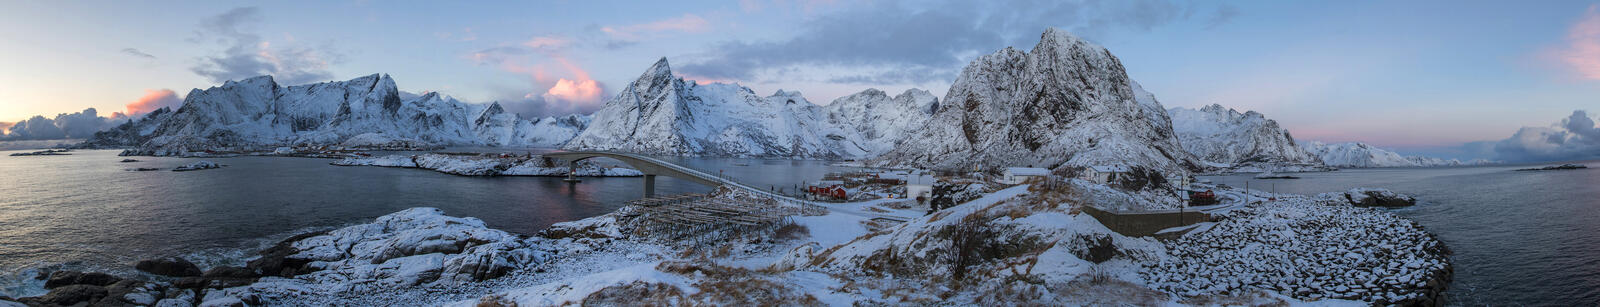 Обои Норвегия Лофотенские острова панорама на рабочий стол